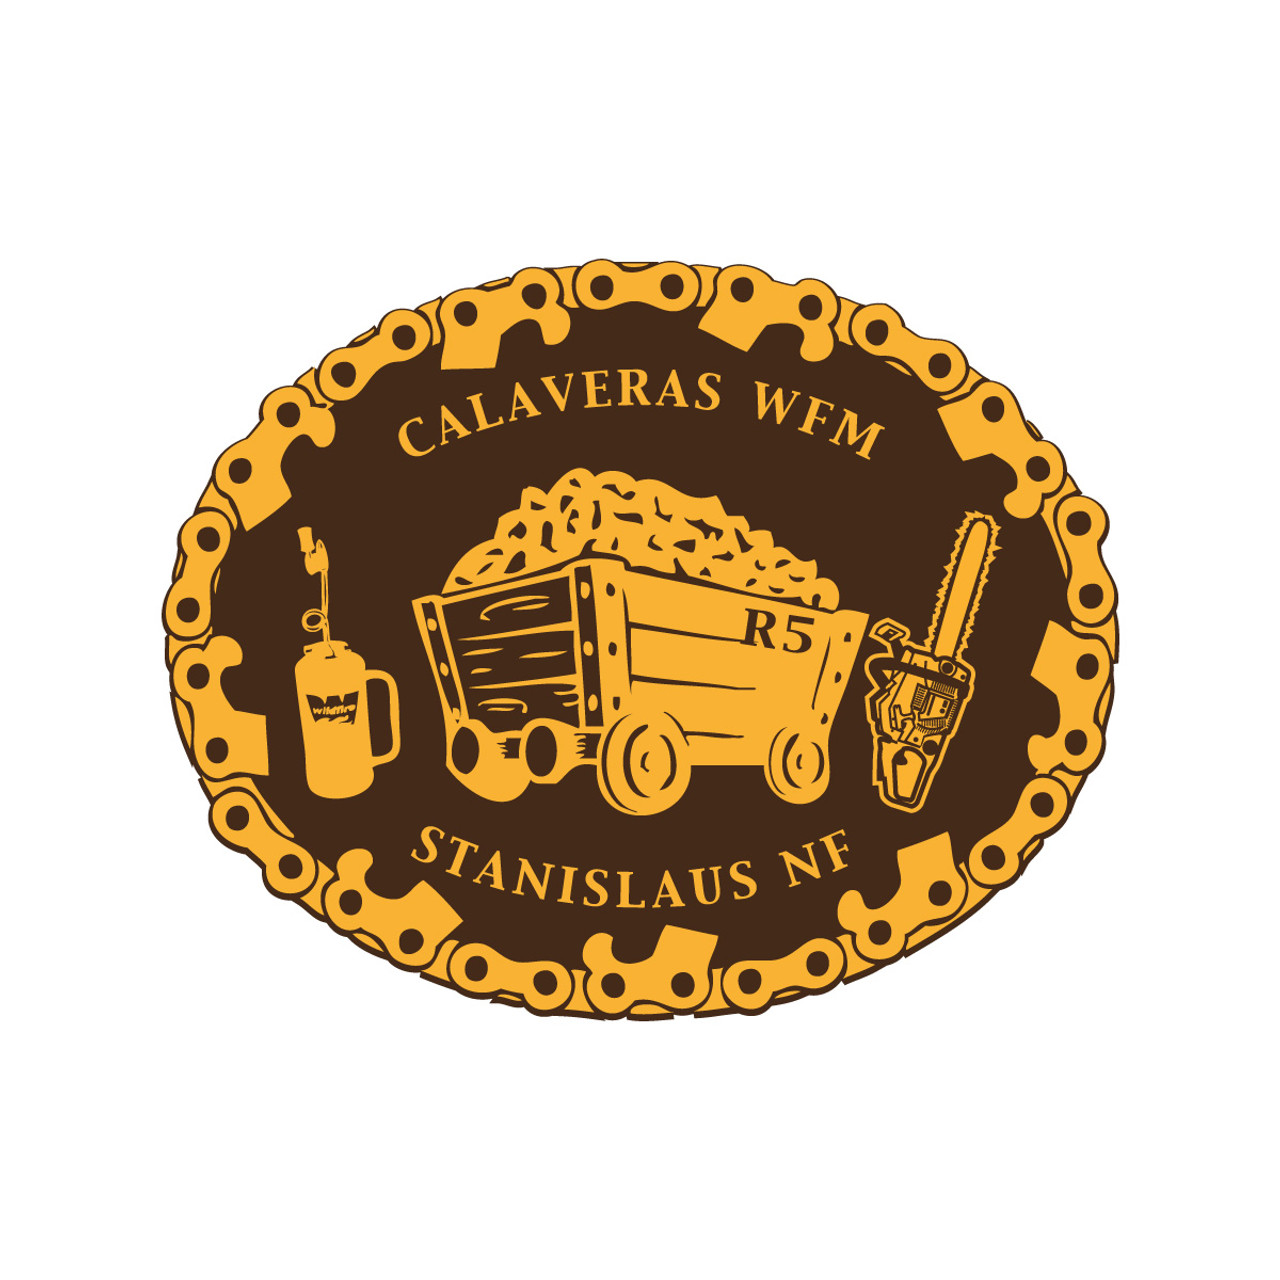 Calavera WFM Buckle (RESTRICTED)